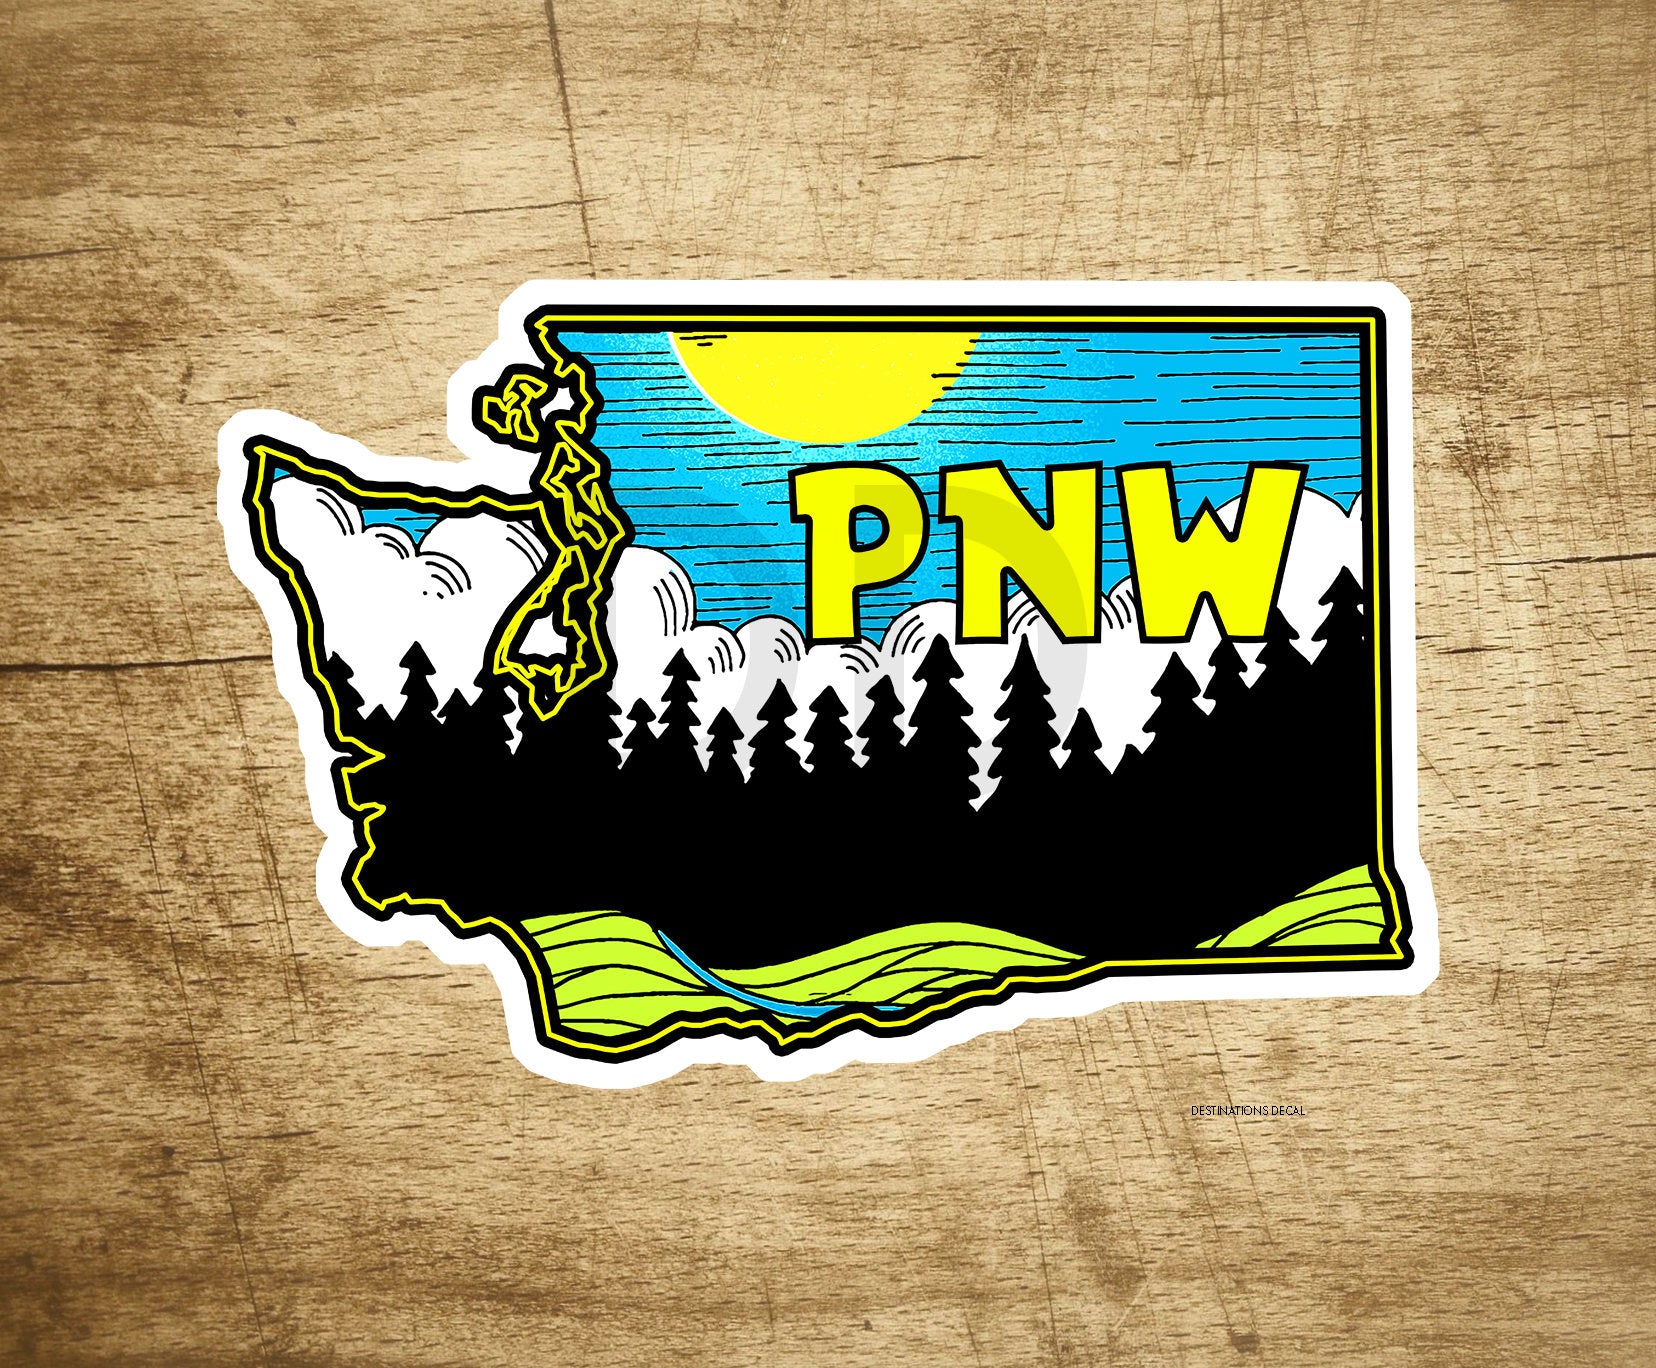 Washington Pacific Northwest Decal Sticker 4" x 2.6" Nature Forest Woods